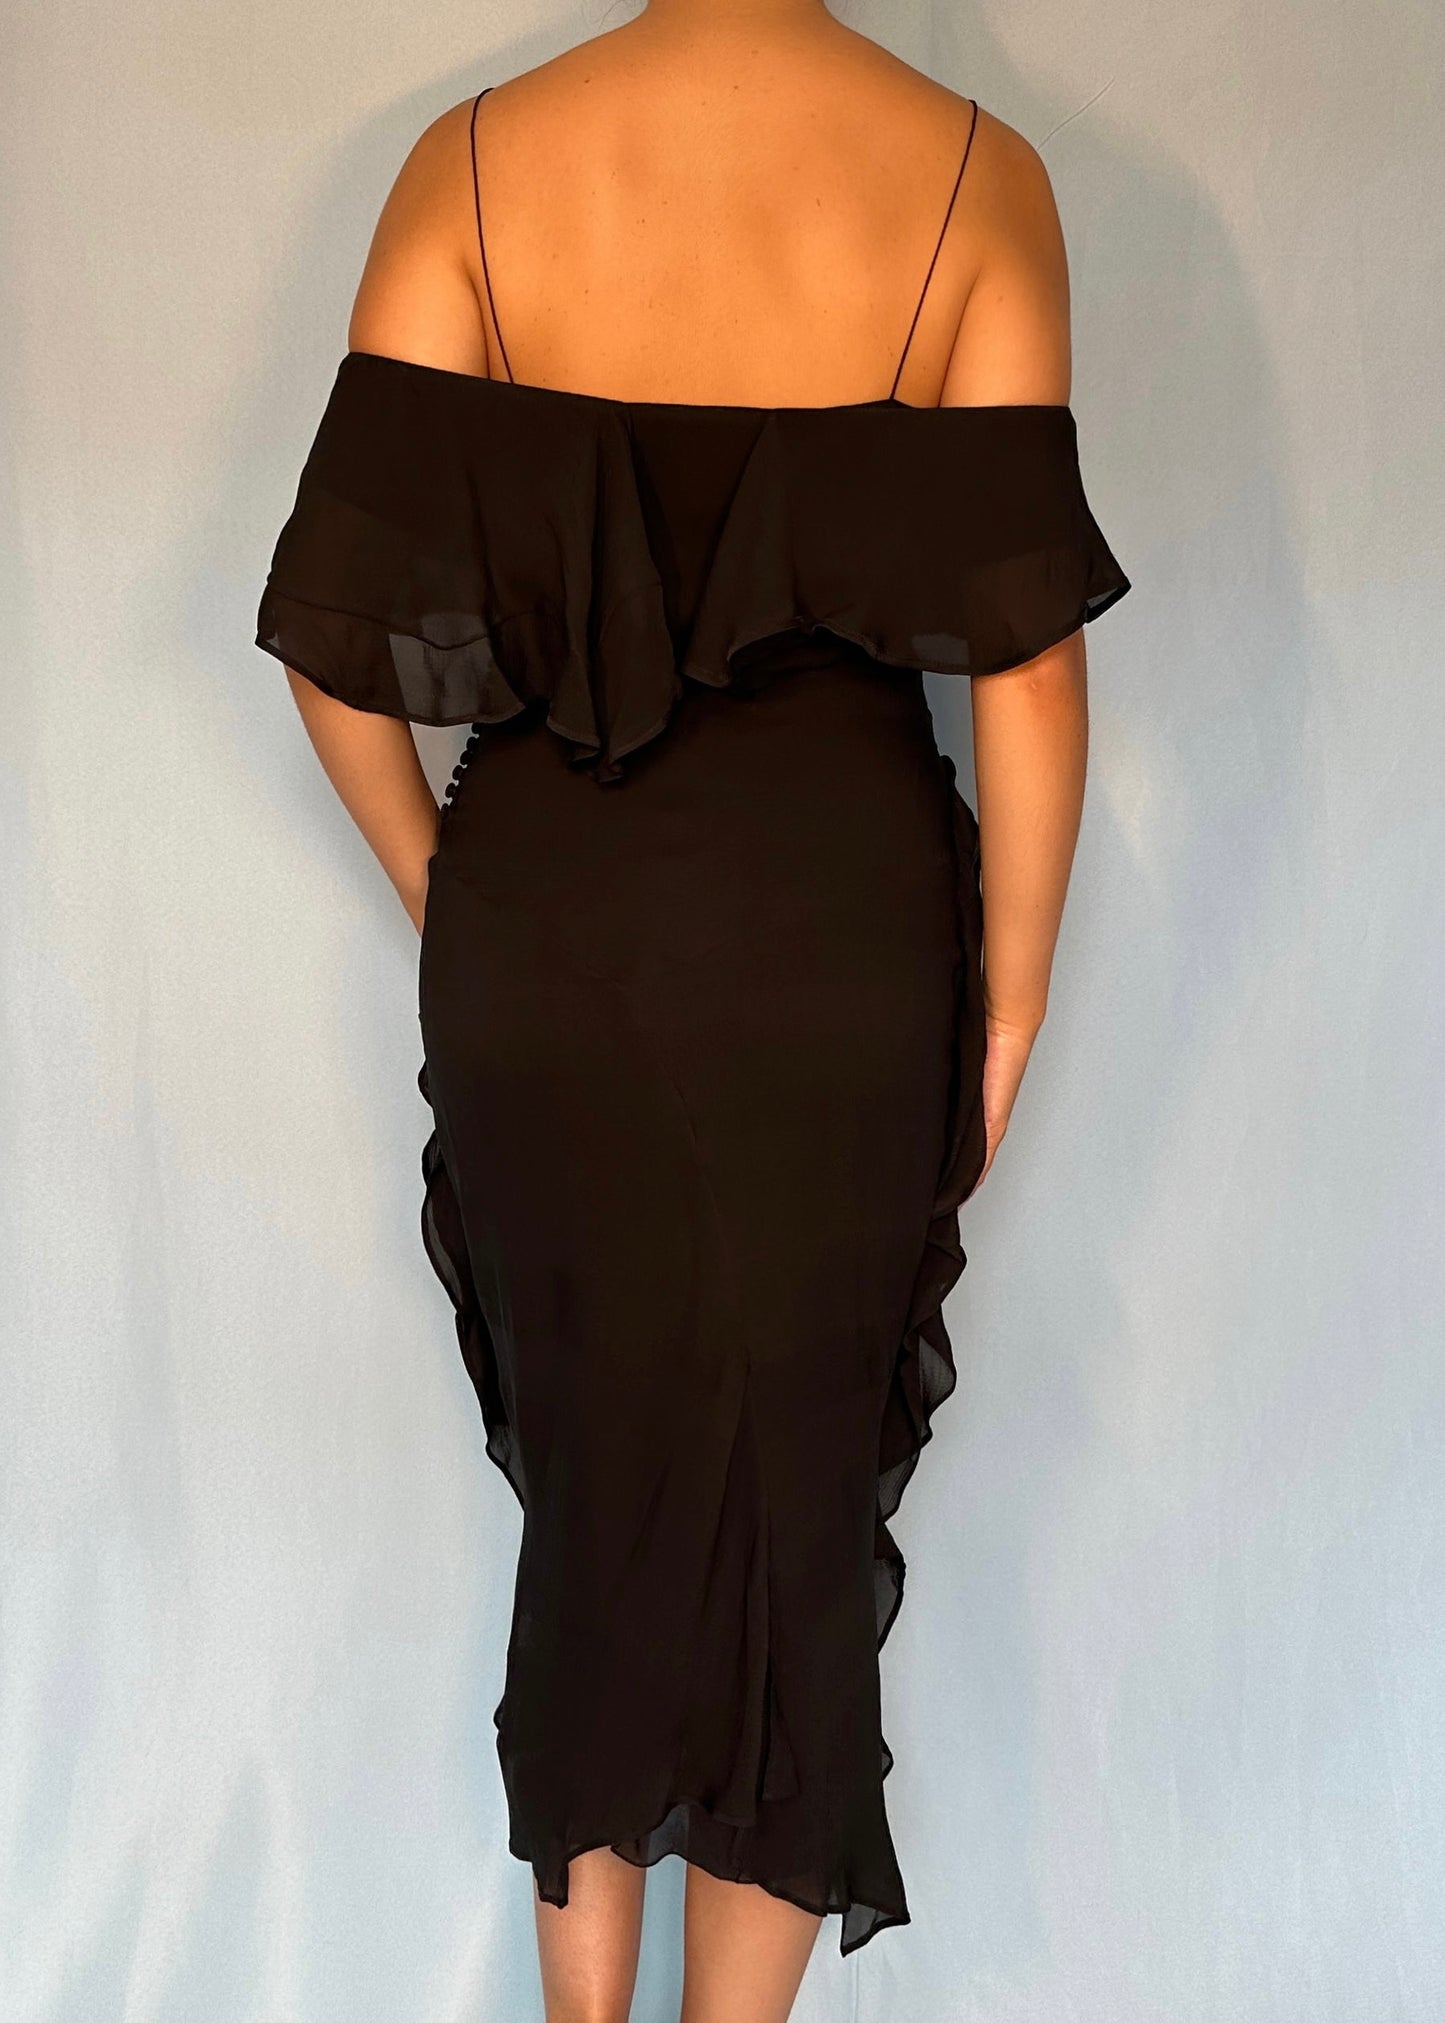 Dior Fall 2006 Black Silk Chiffon Ruffle Dress